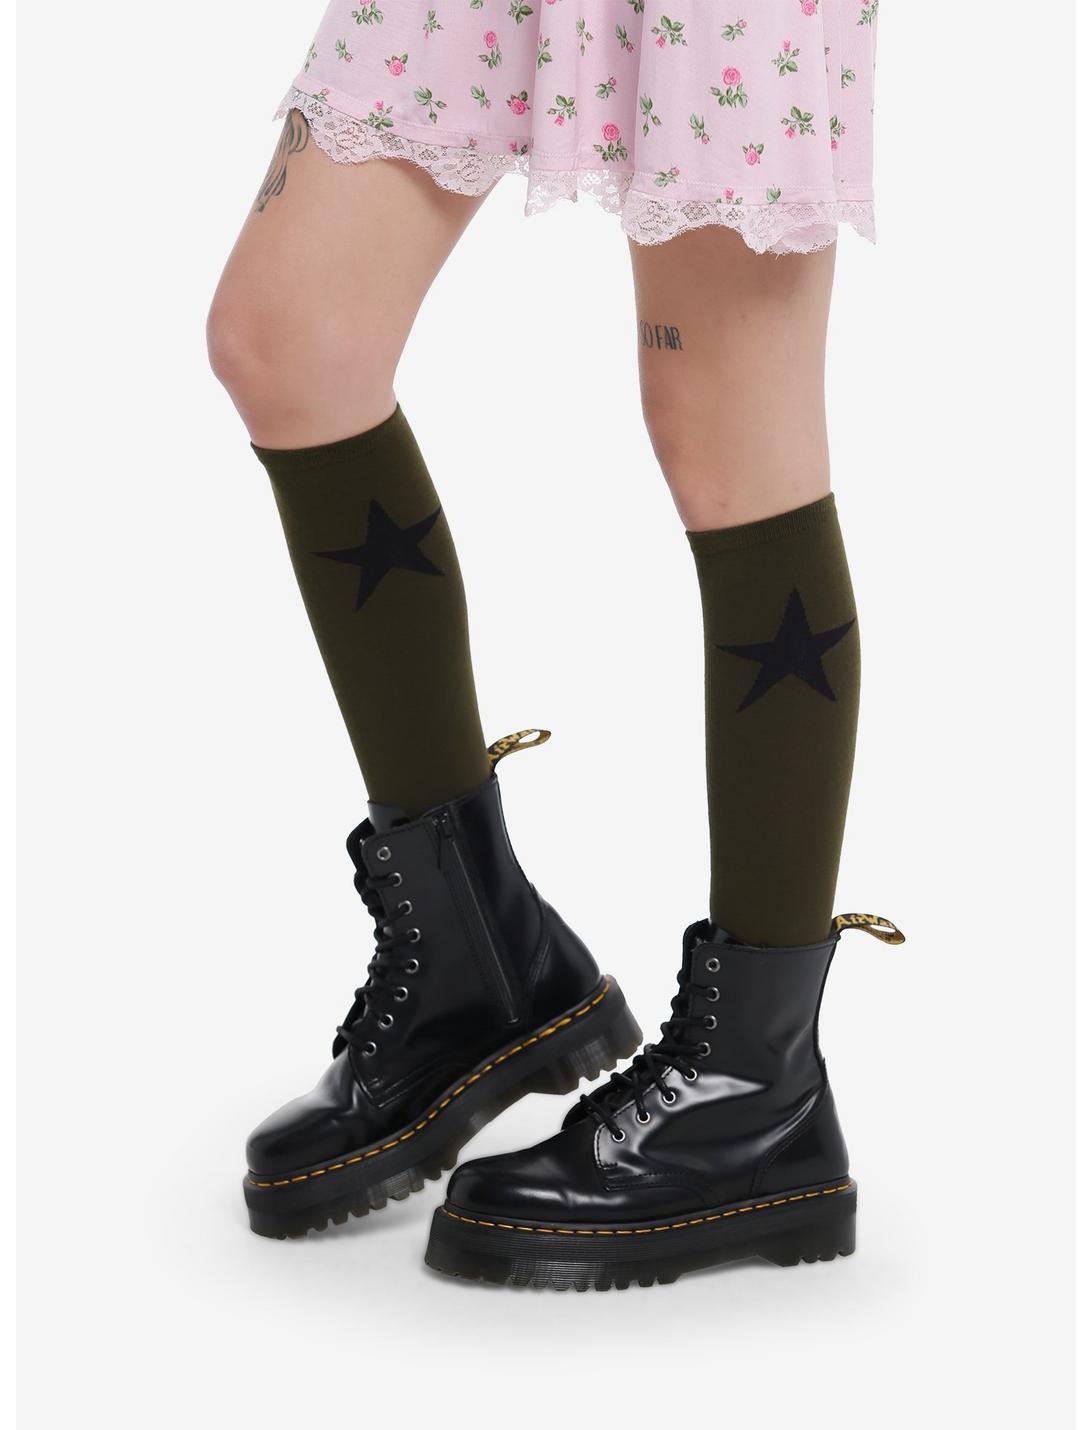 Green & Black Star Knee-High Socks, , hi-res